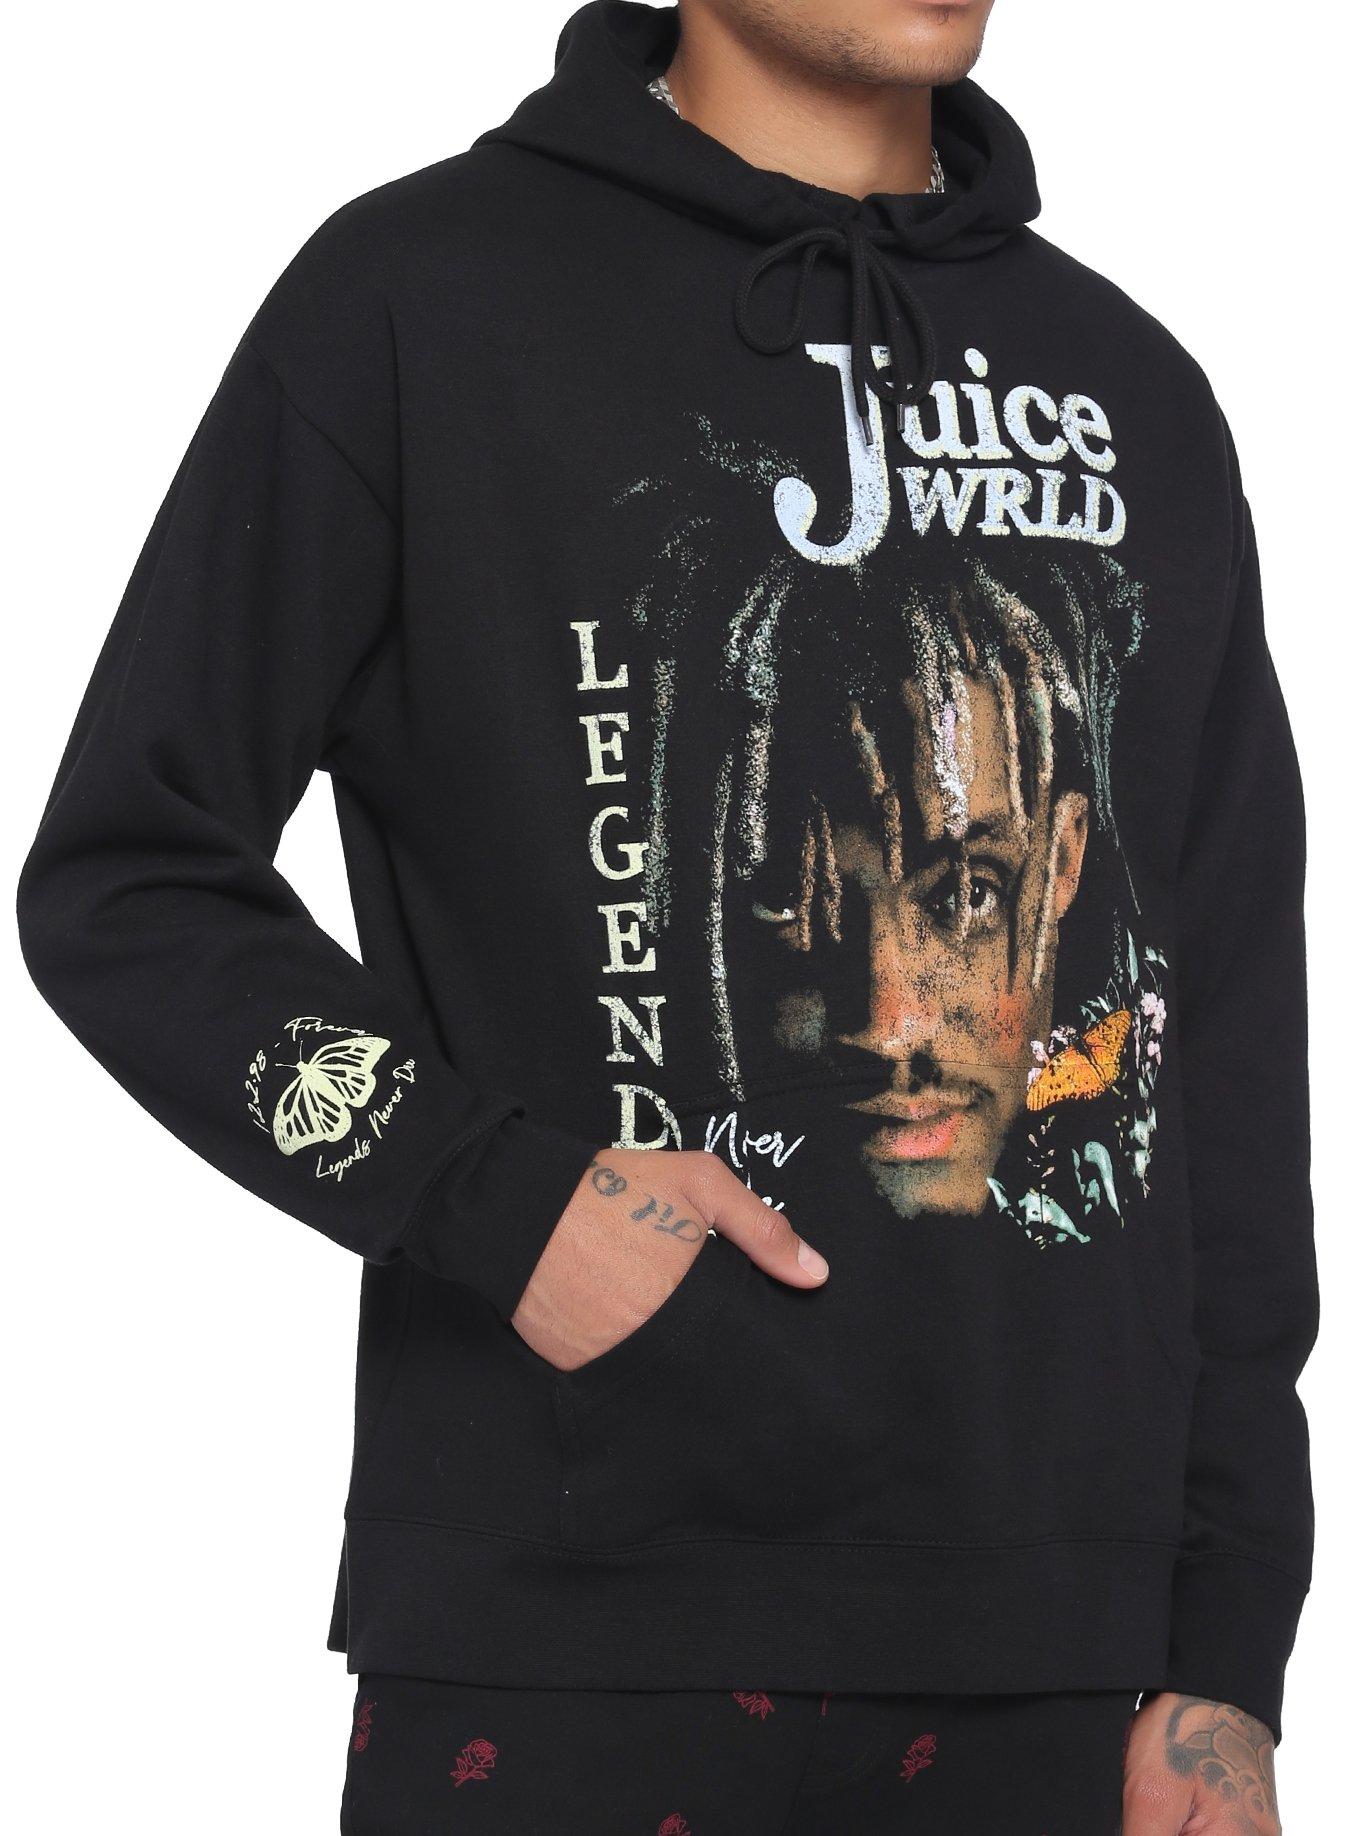 Juice Wrld Outfits - Jackets, Vests, Hoodies